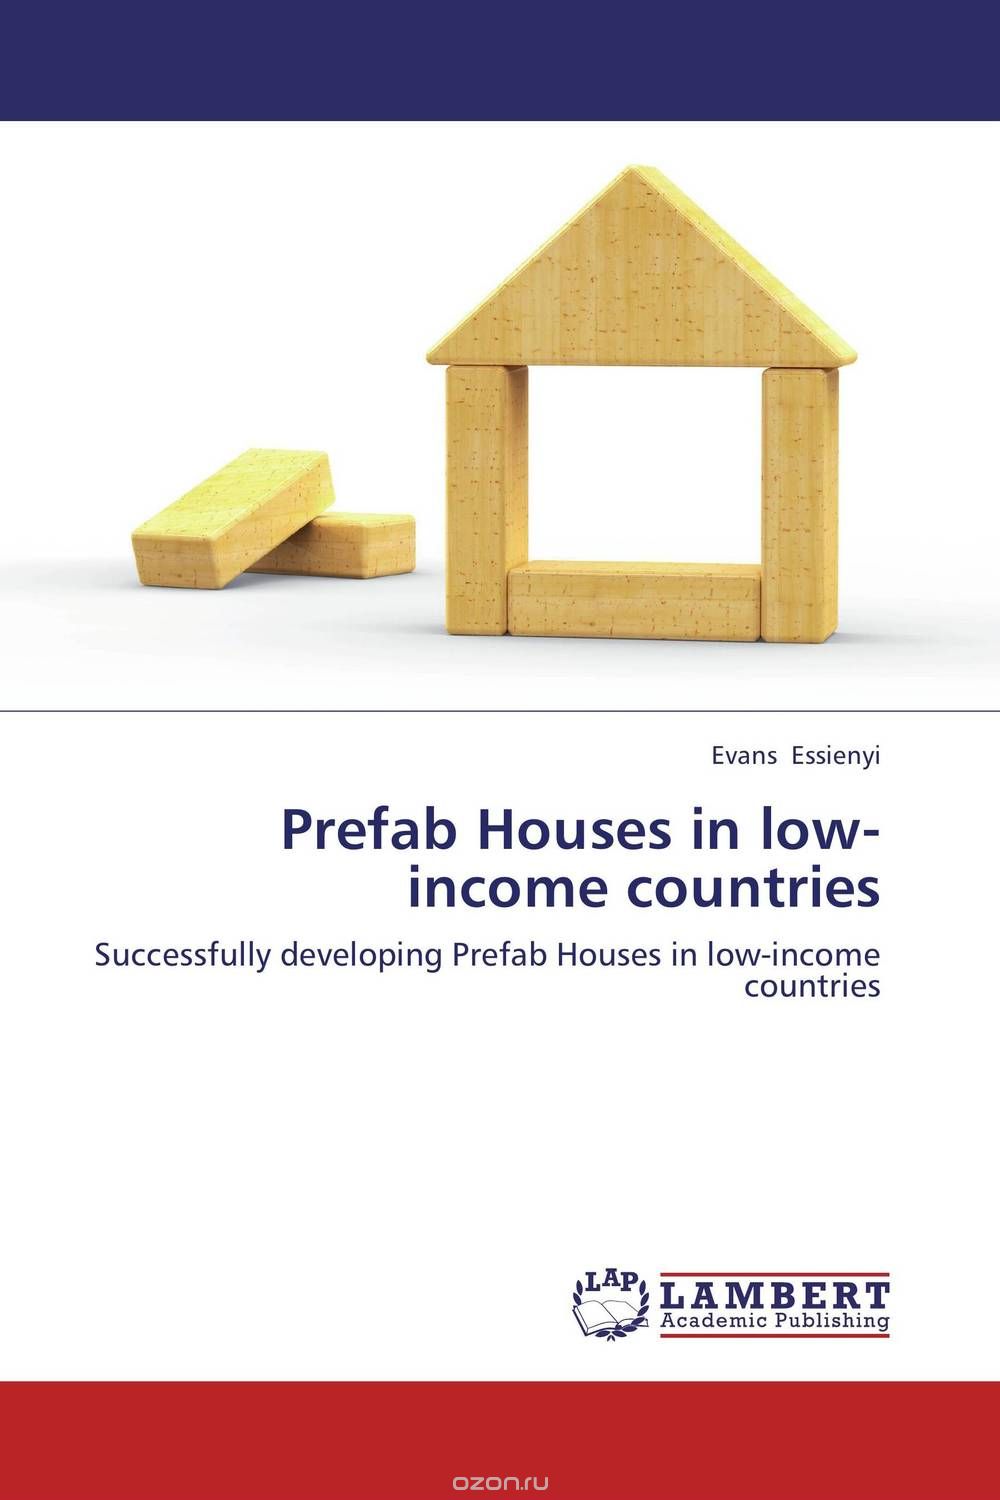 Скачать книгу "Prefab Houses in low-income countries"